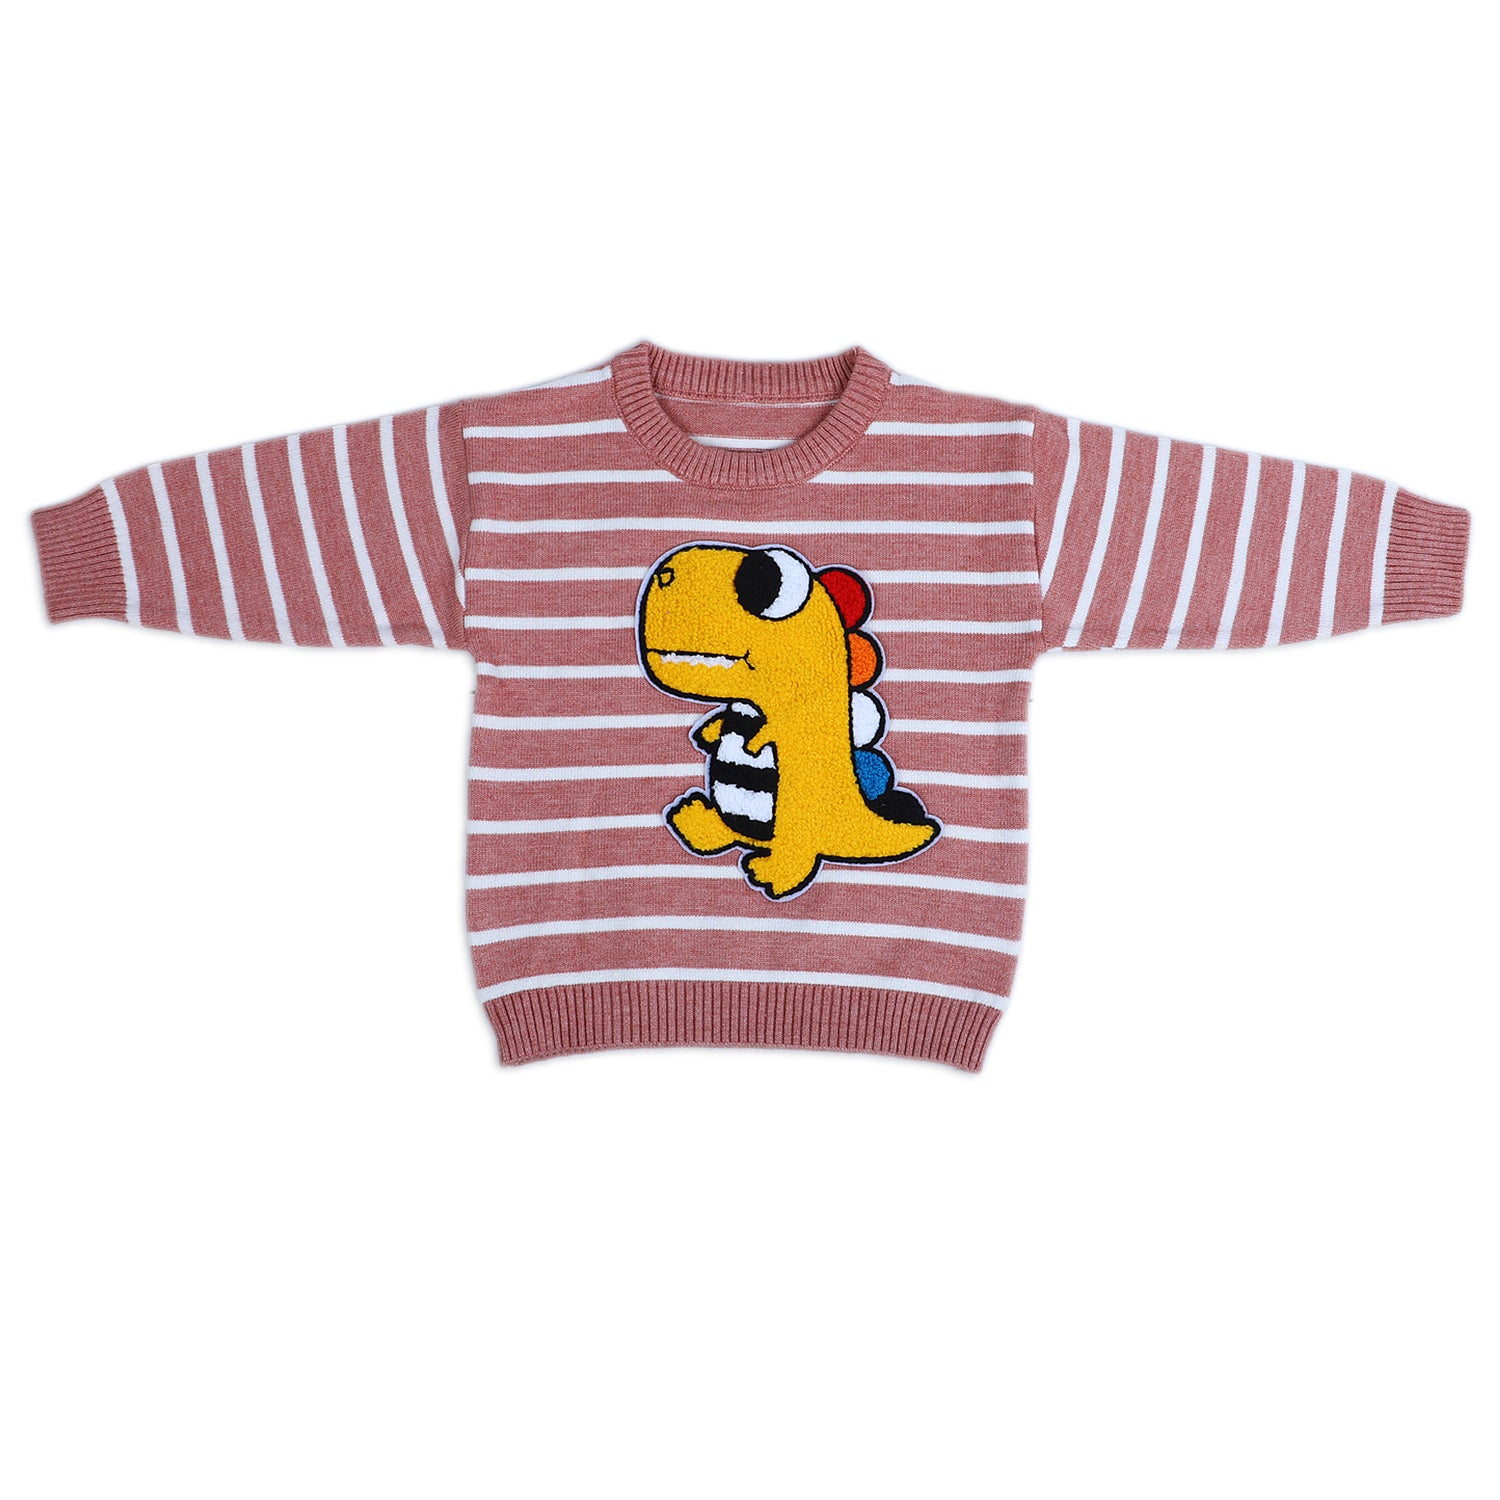 Dashing Dino Striped Premium Full Sleeves Knitted Sweater - Reddish Brown - Baby Moo